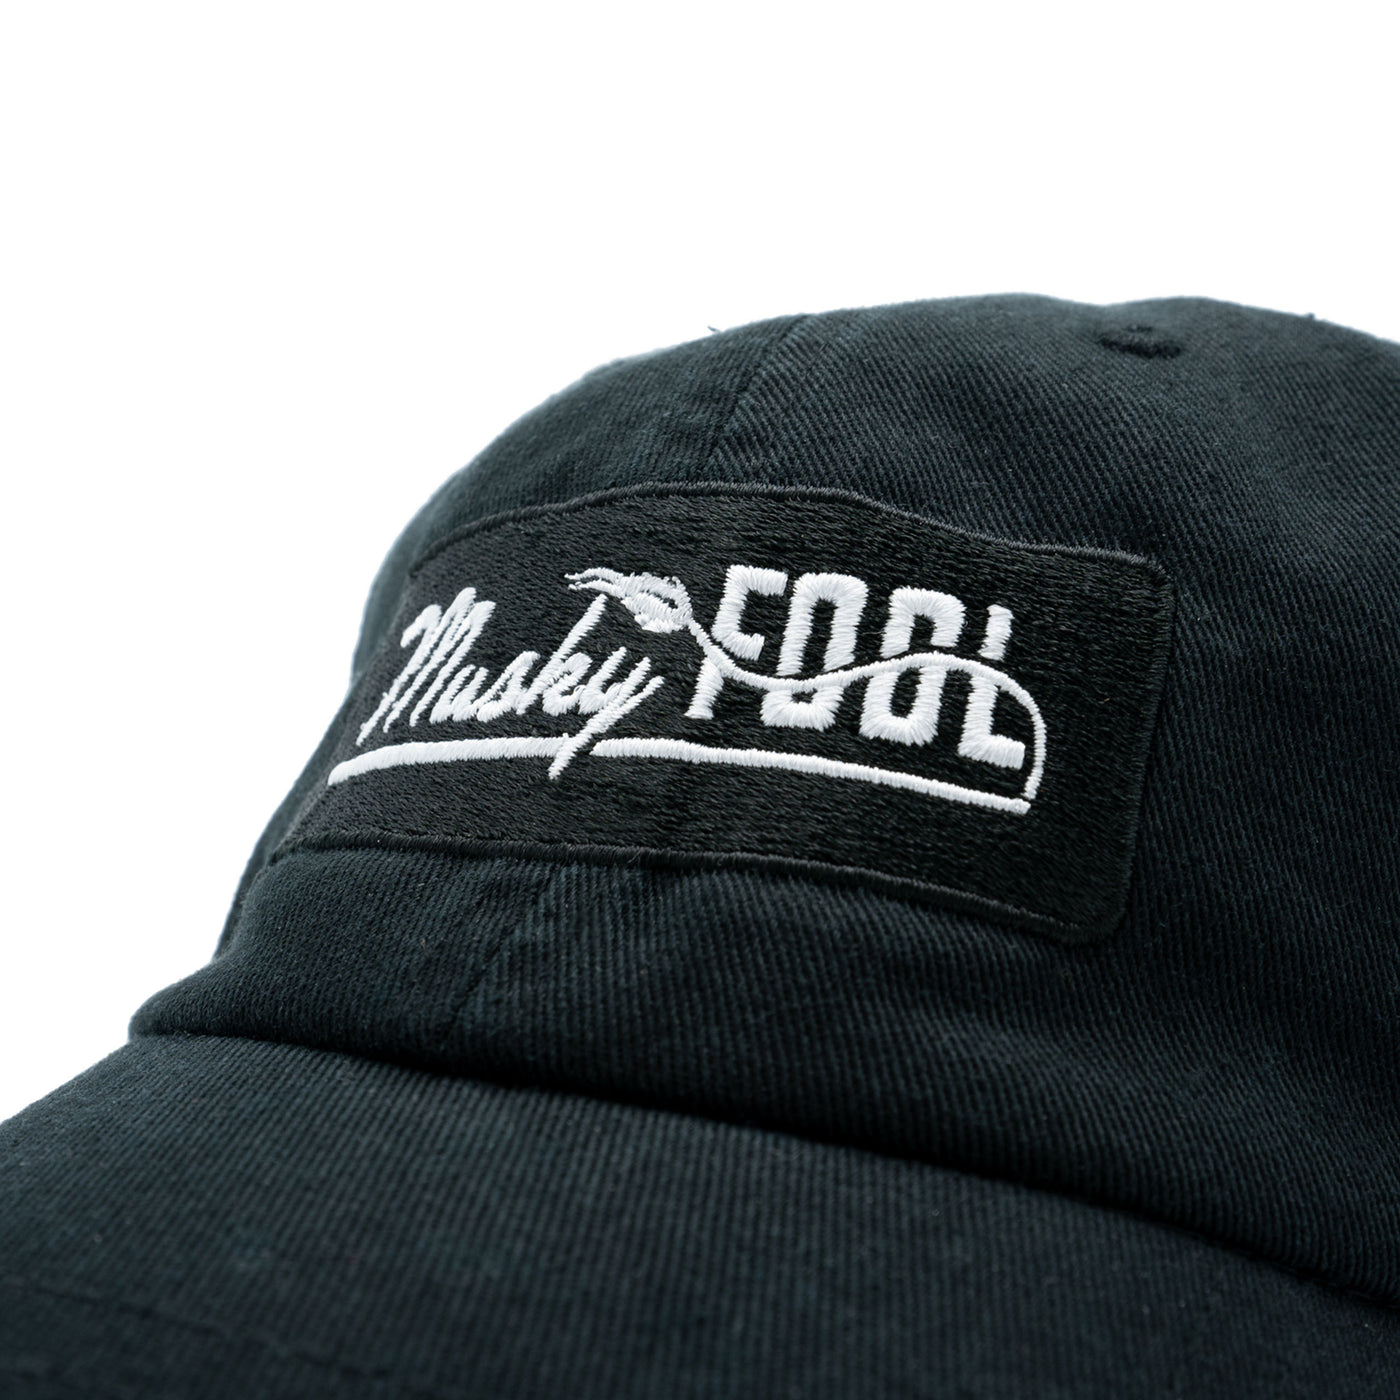 Musky Fool x Simms Single Haul Hat Black